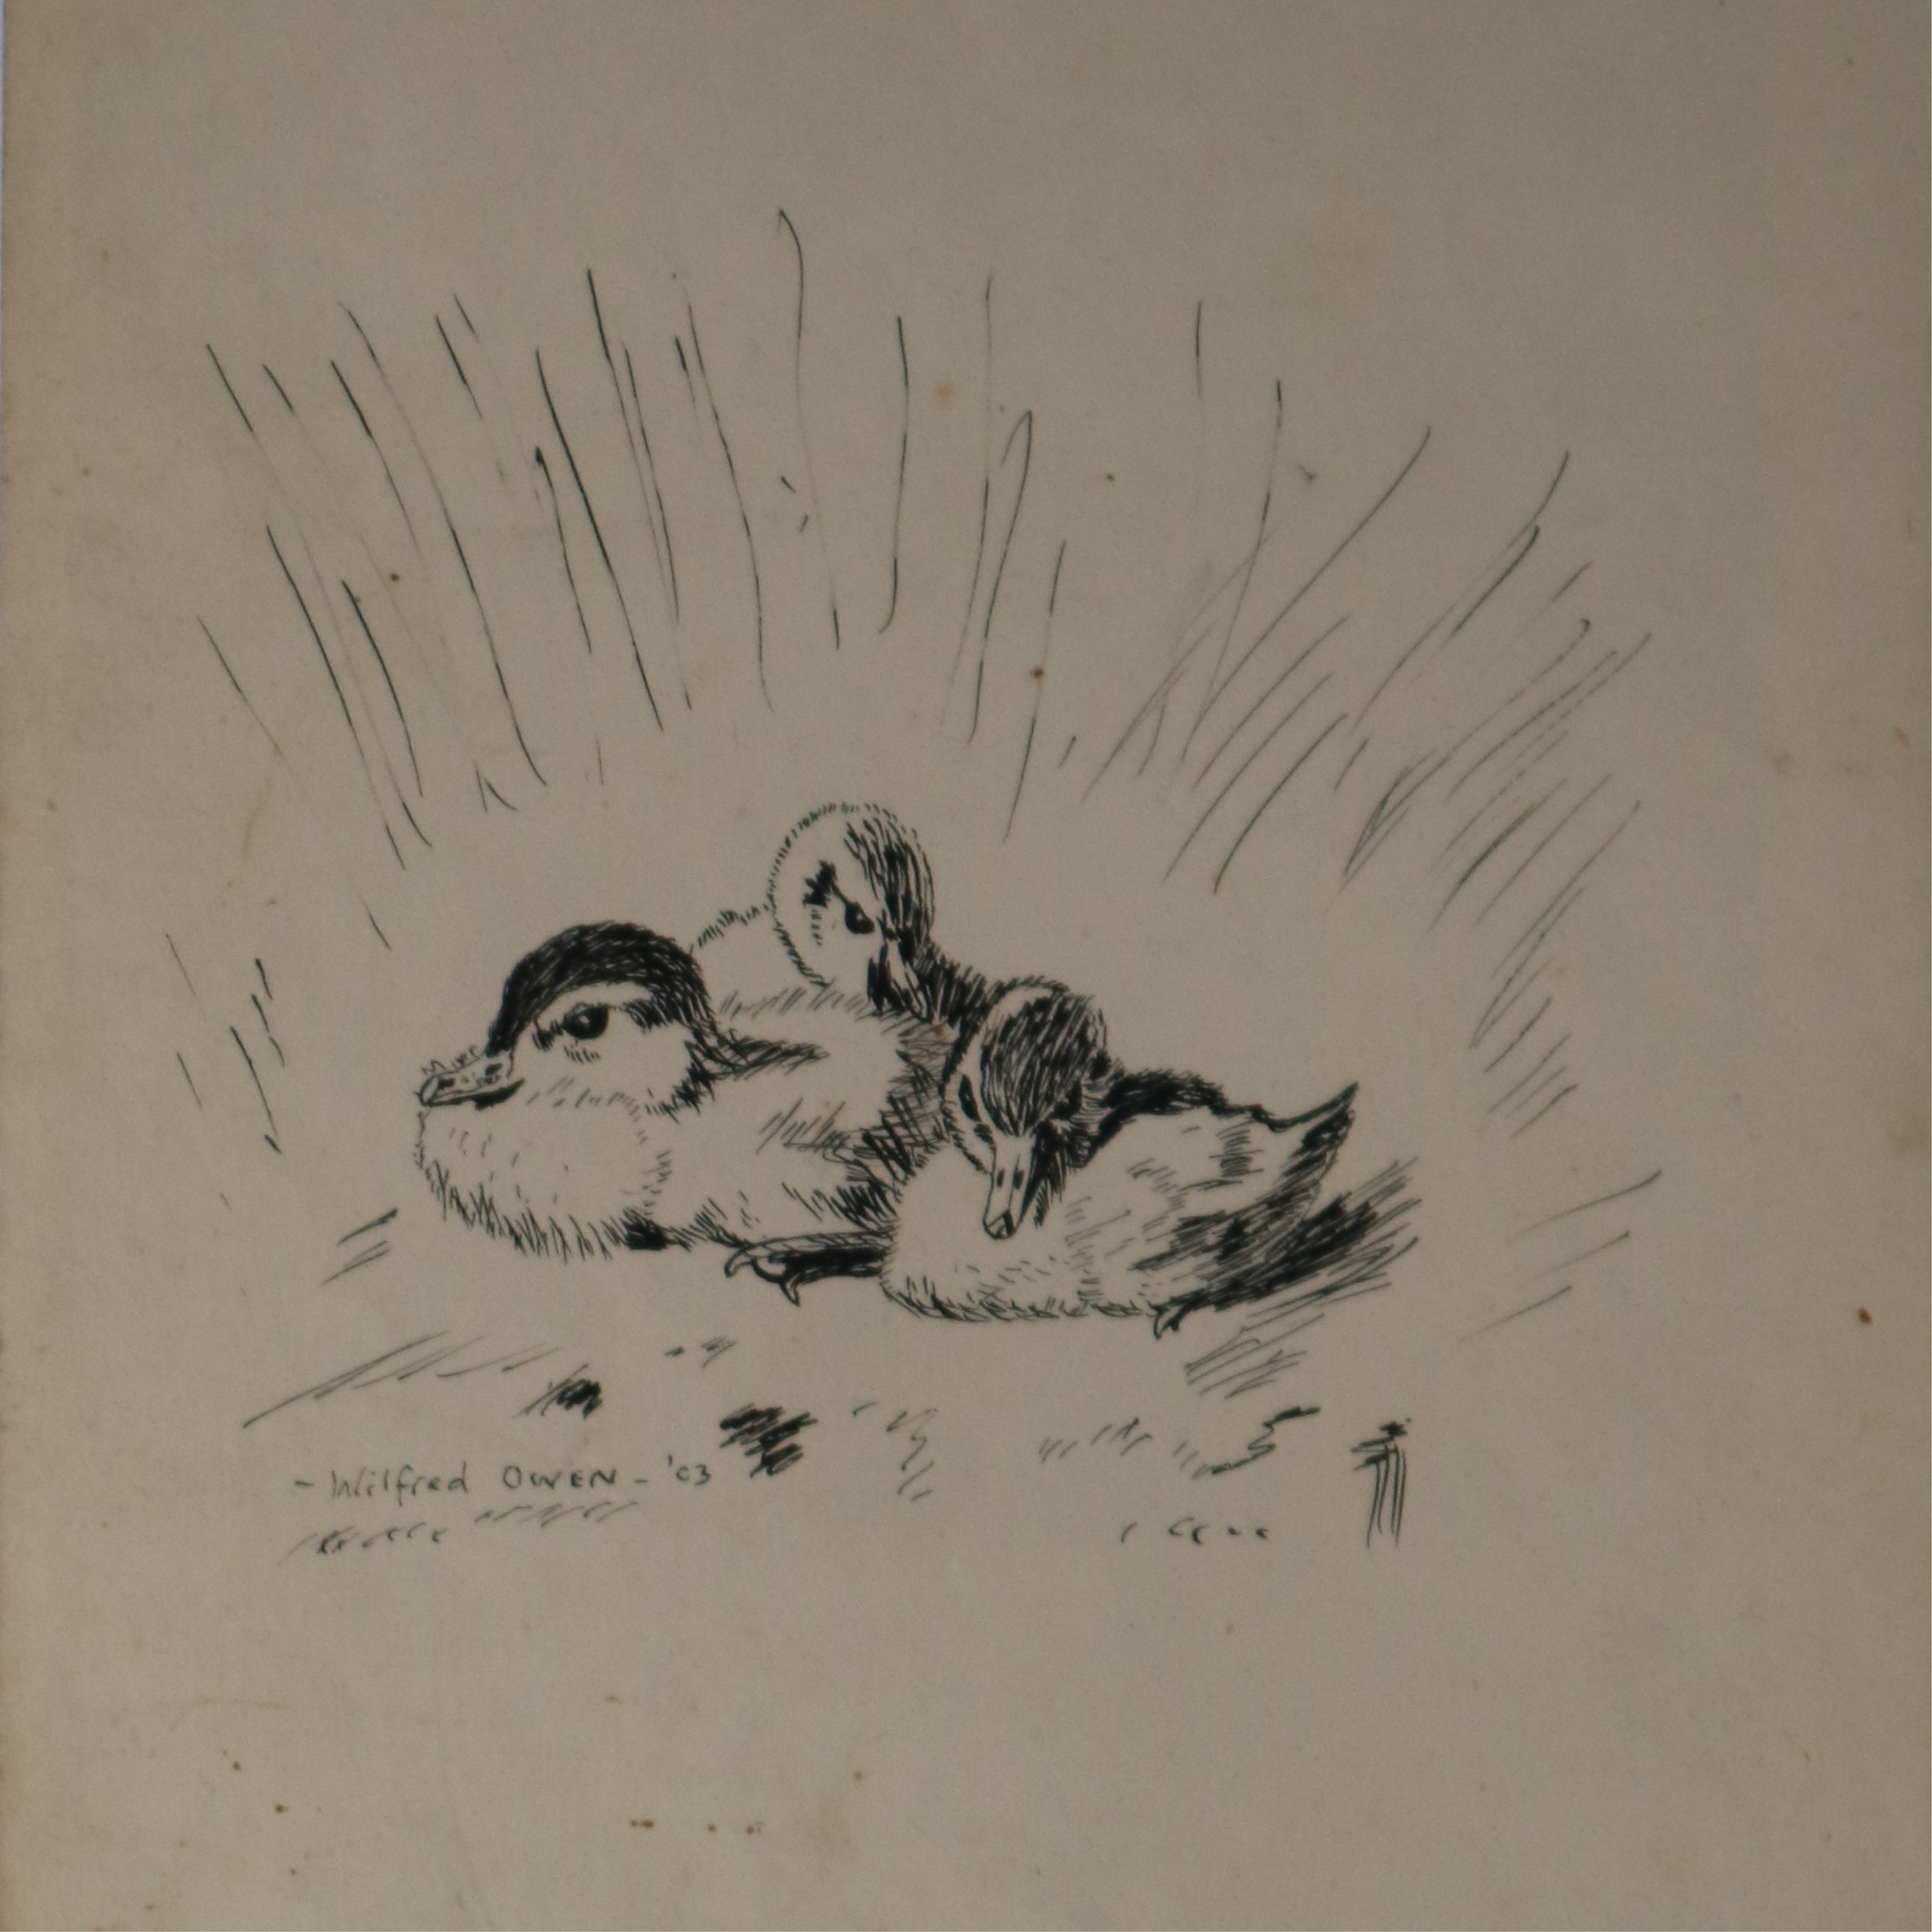 Wilfred Owen (British 1898-1918), Ink Sketch of Three Ducklings